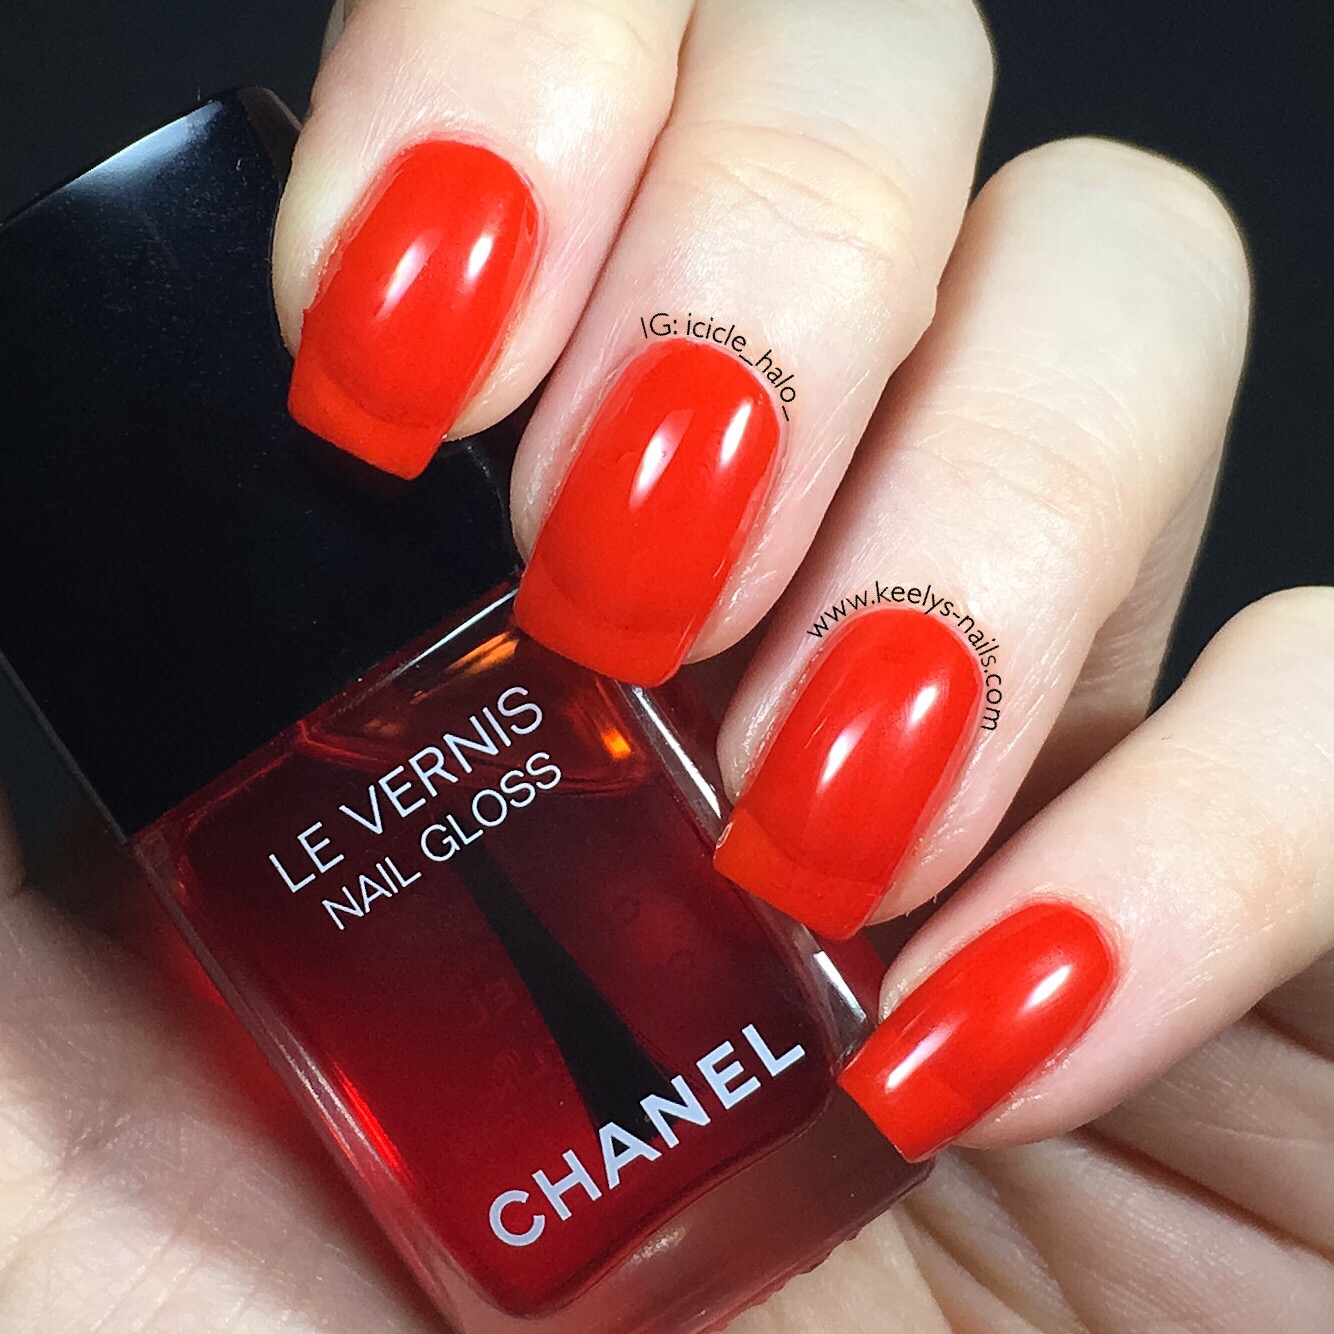 Chanel Nail Polish Fall 2016 Swatches - Keely's Nails